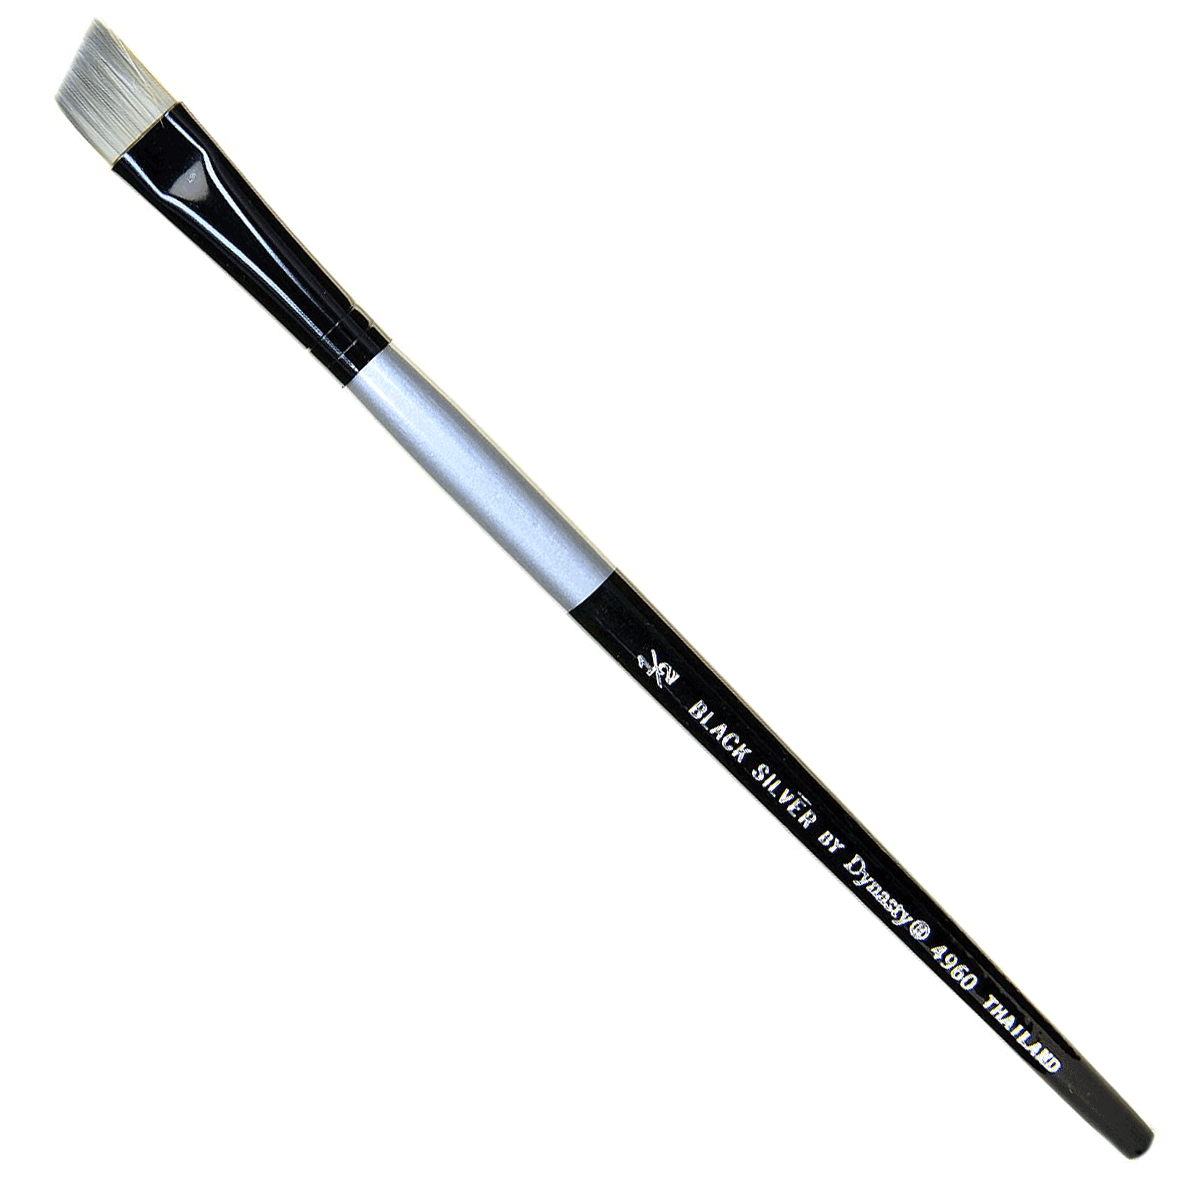 Dynasty Black Silver SH Brush - Angle 1/2 inch